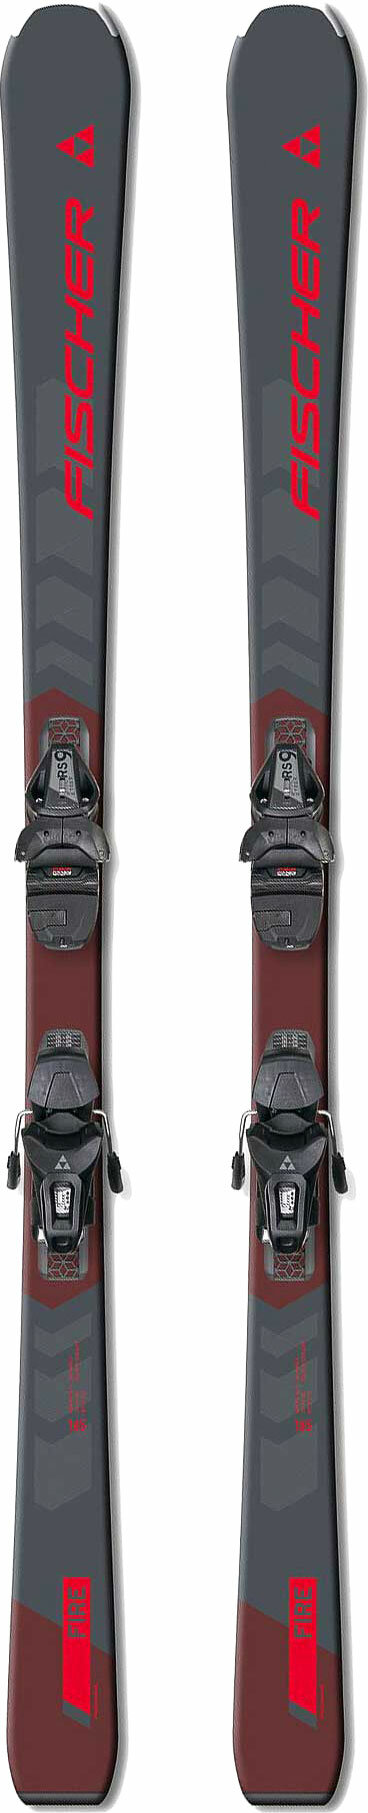 Горные лыжи FISCHER RC FIRE SLR + RS 9 SLR (23/24), 165 см